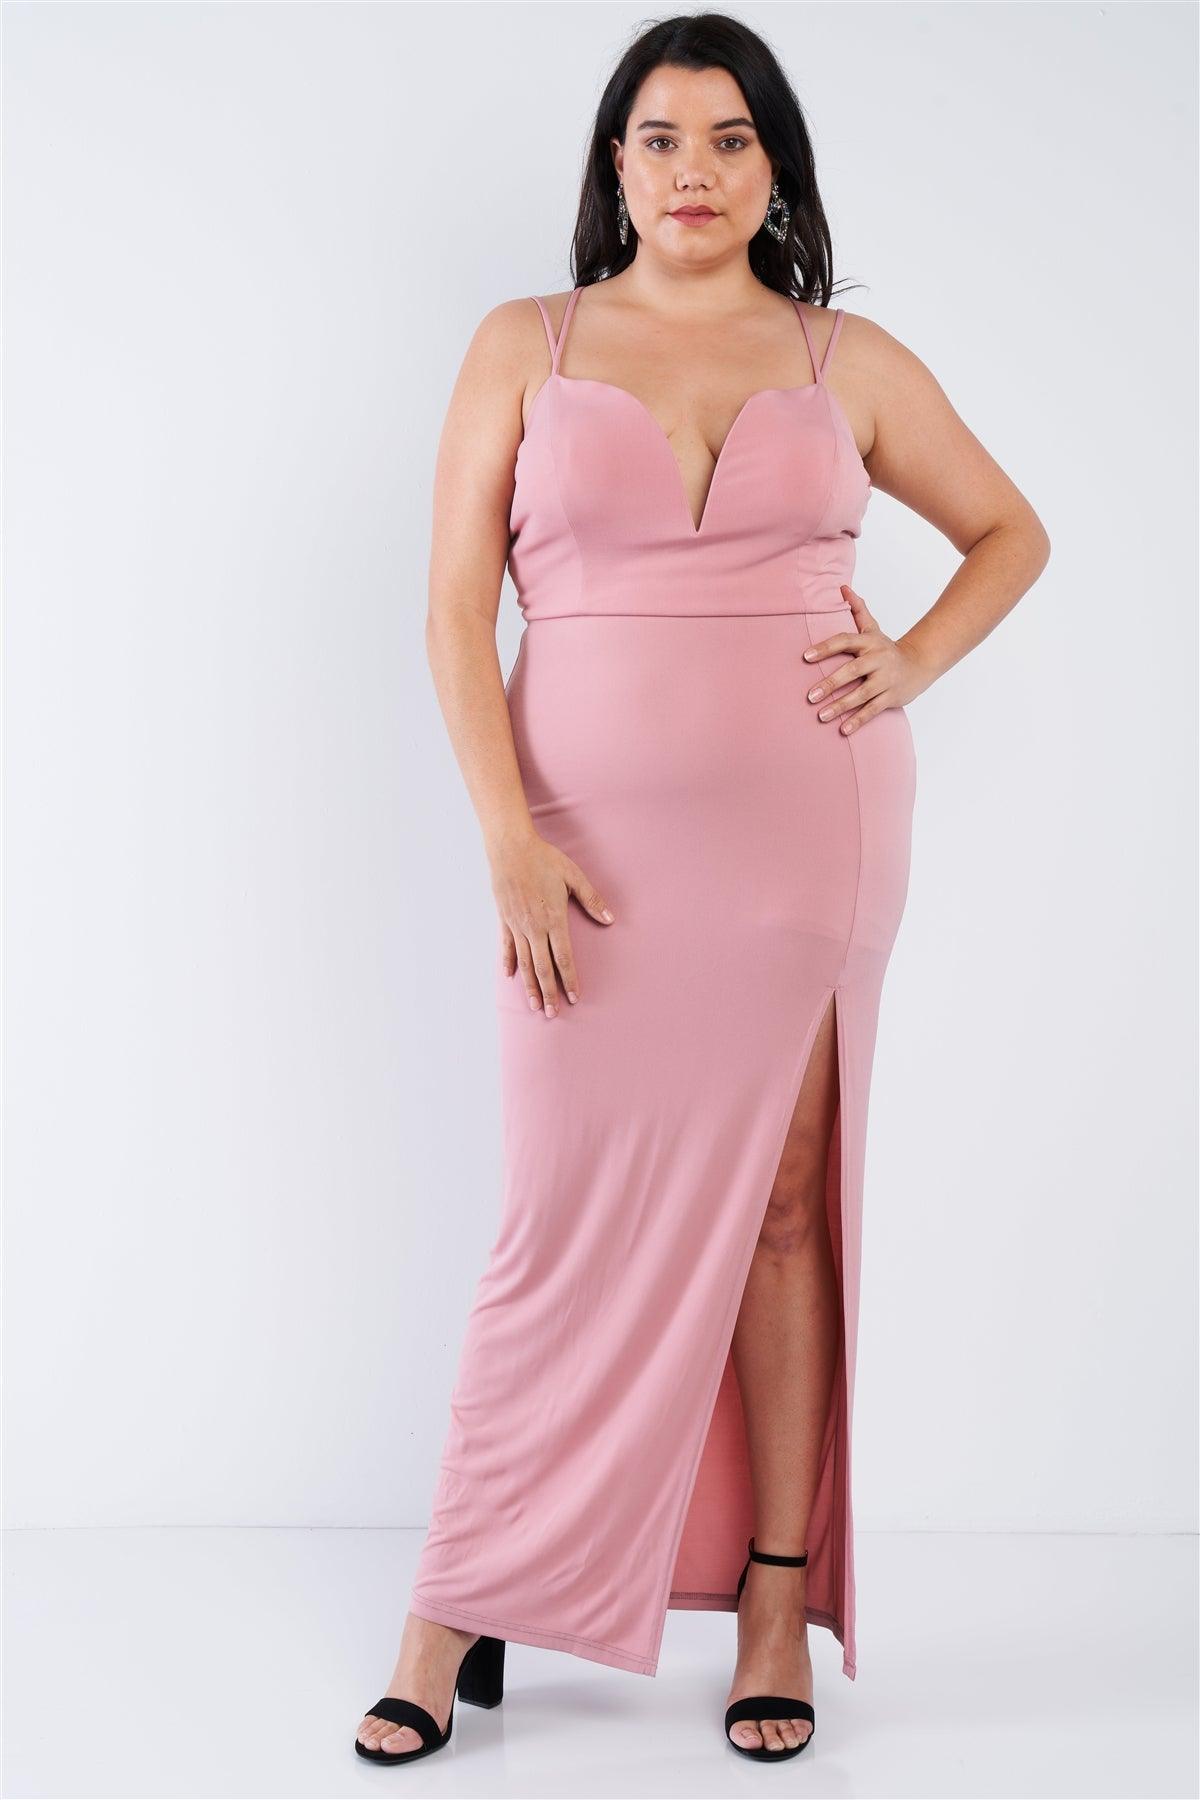 Junior Plus Size Sexy Mauve Pink Floor Length Dress /2-2-2